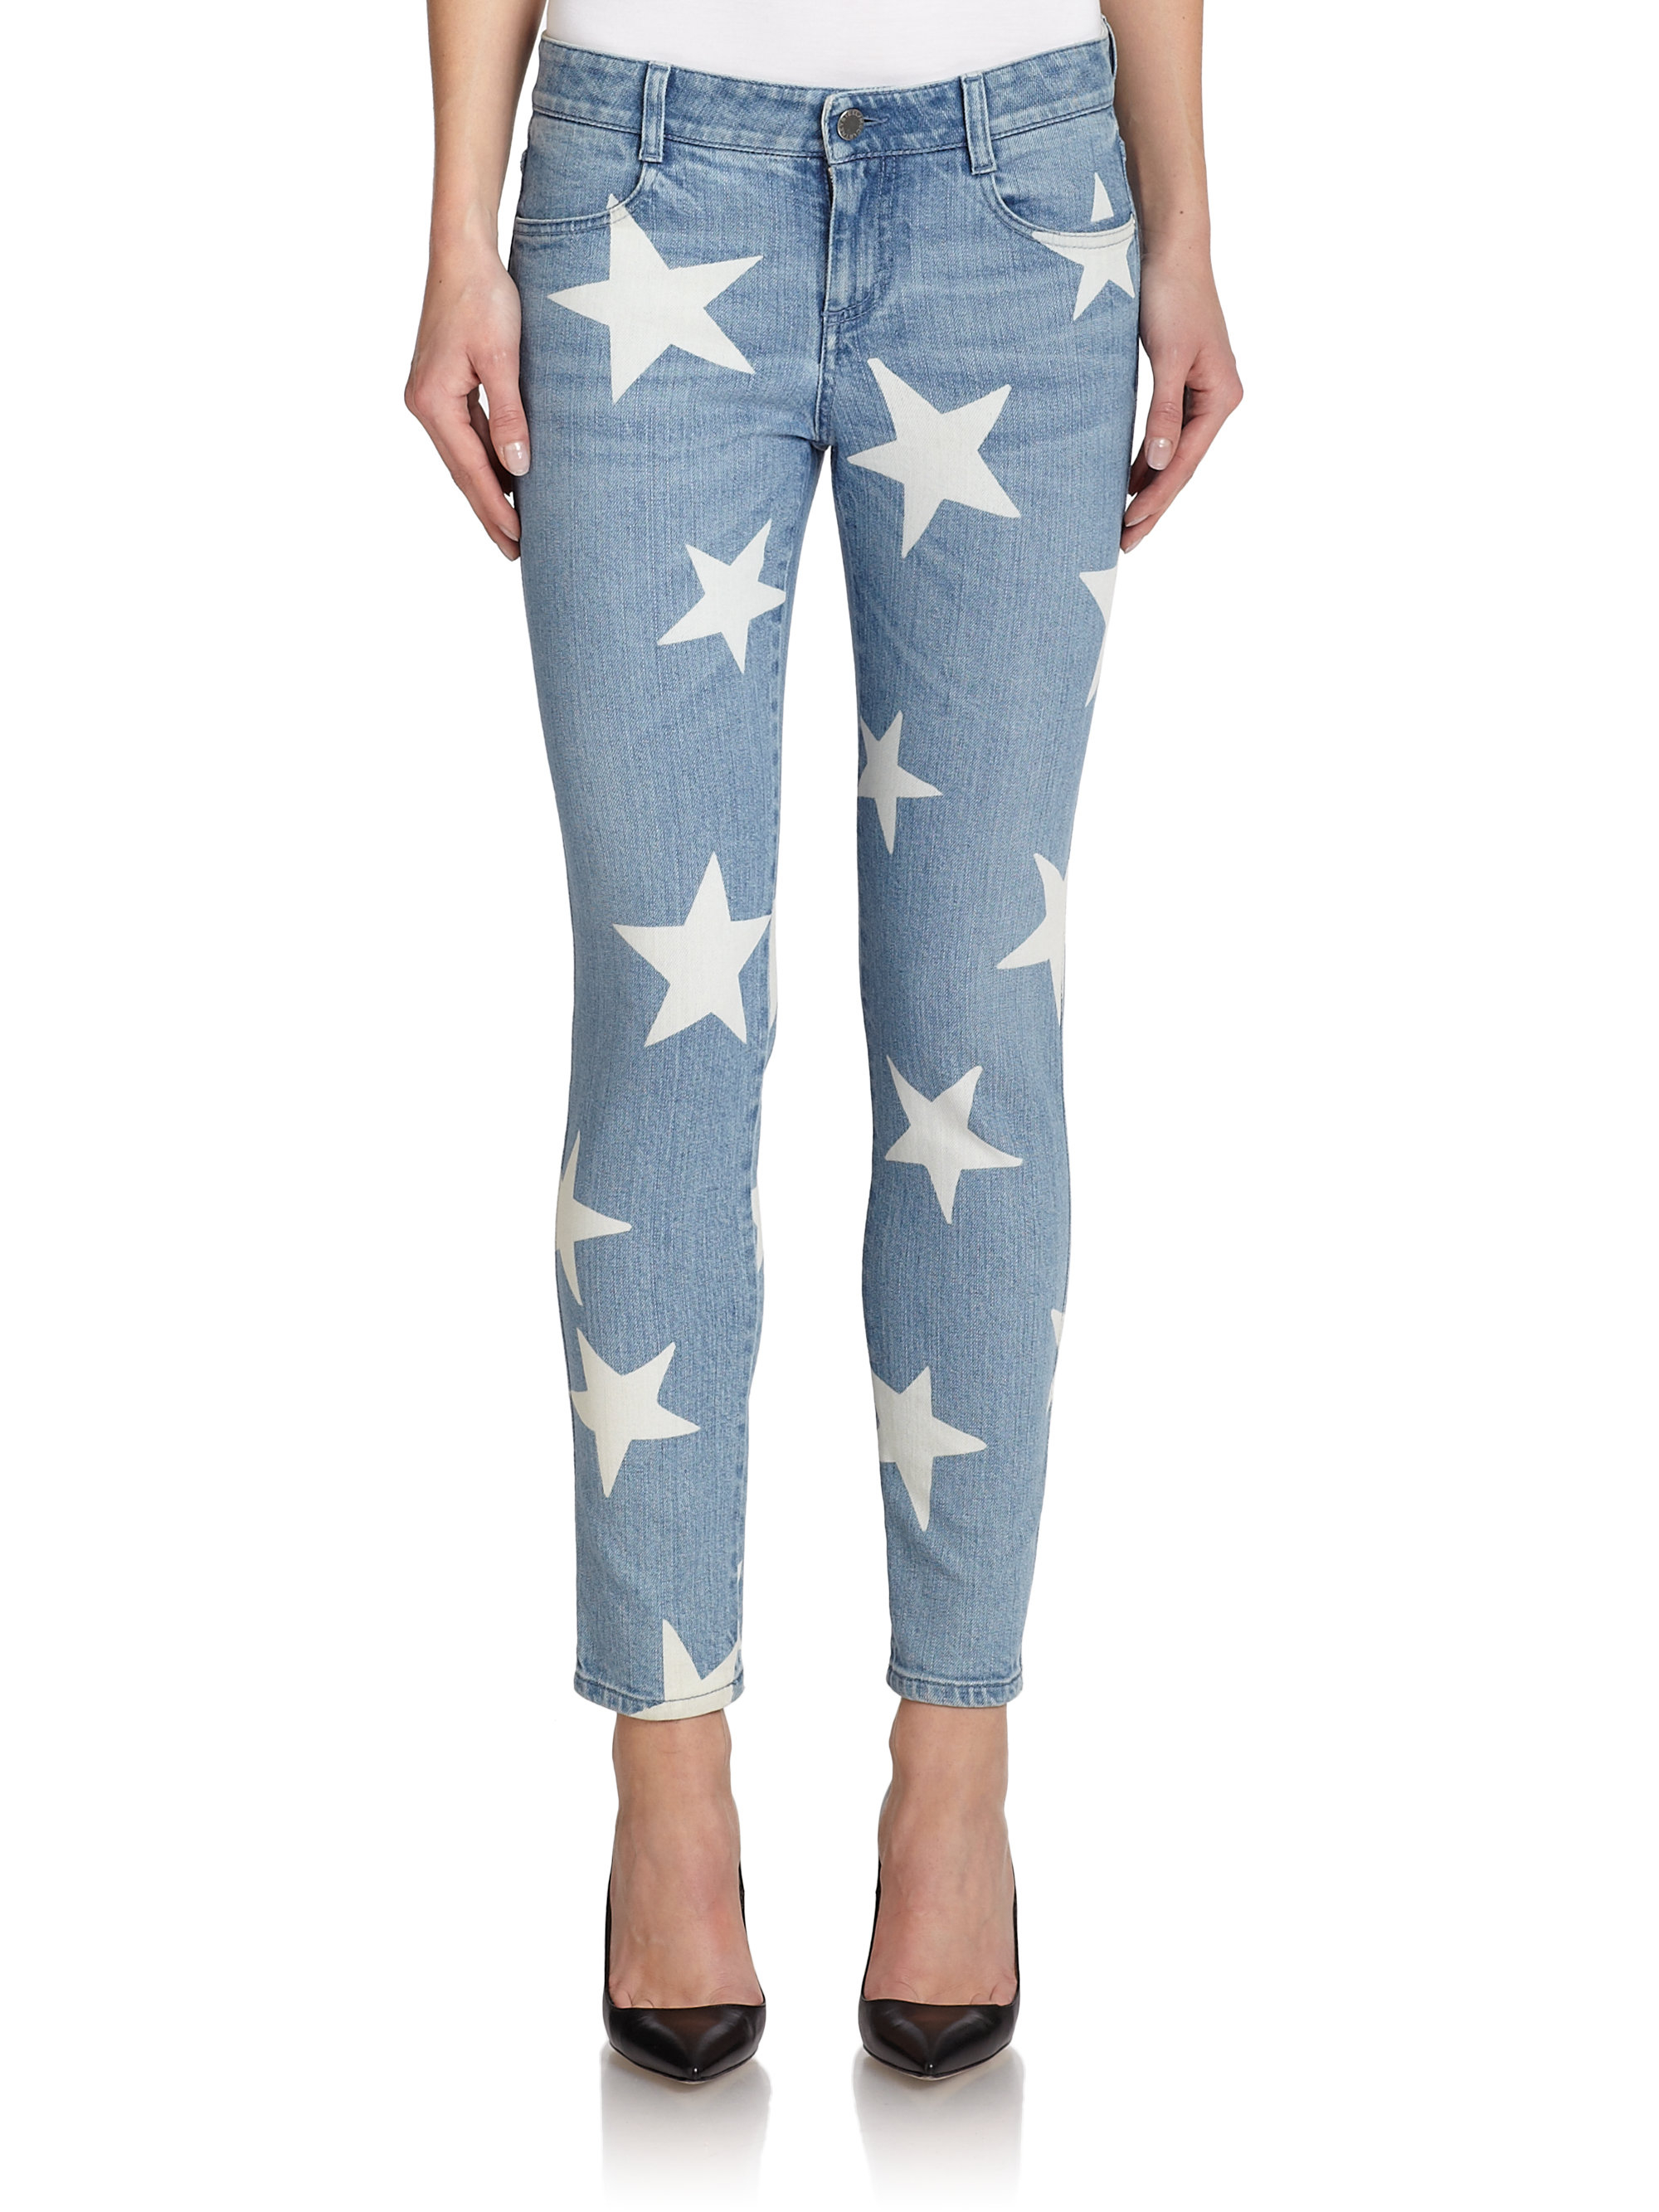 Stella mccartney Star-print Skinny Jeans in Blue | Lyst